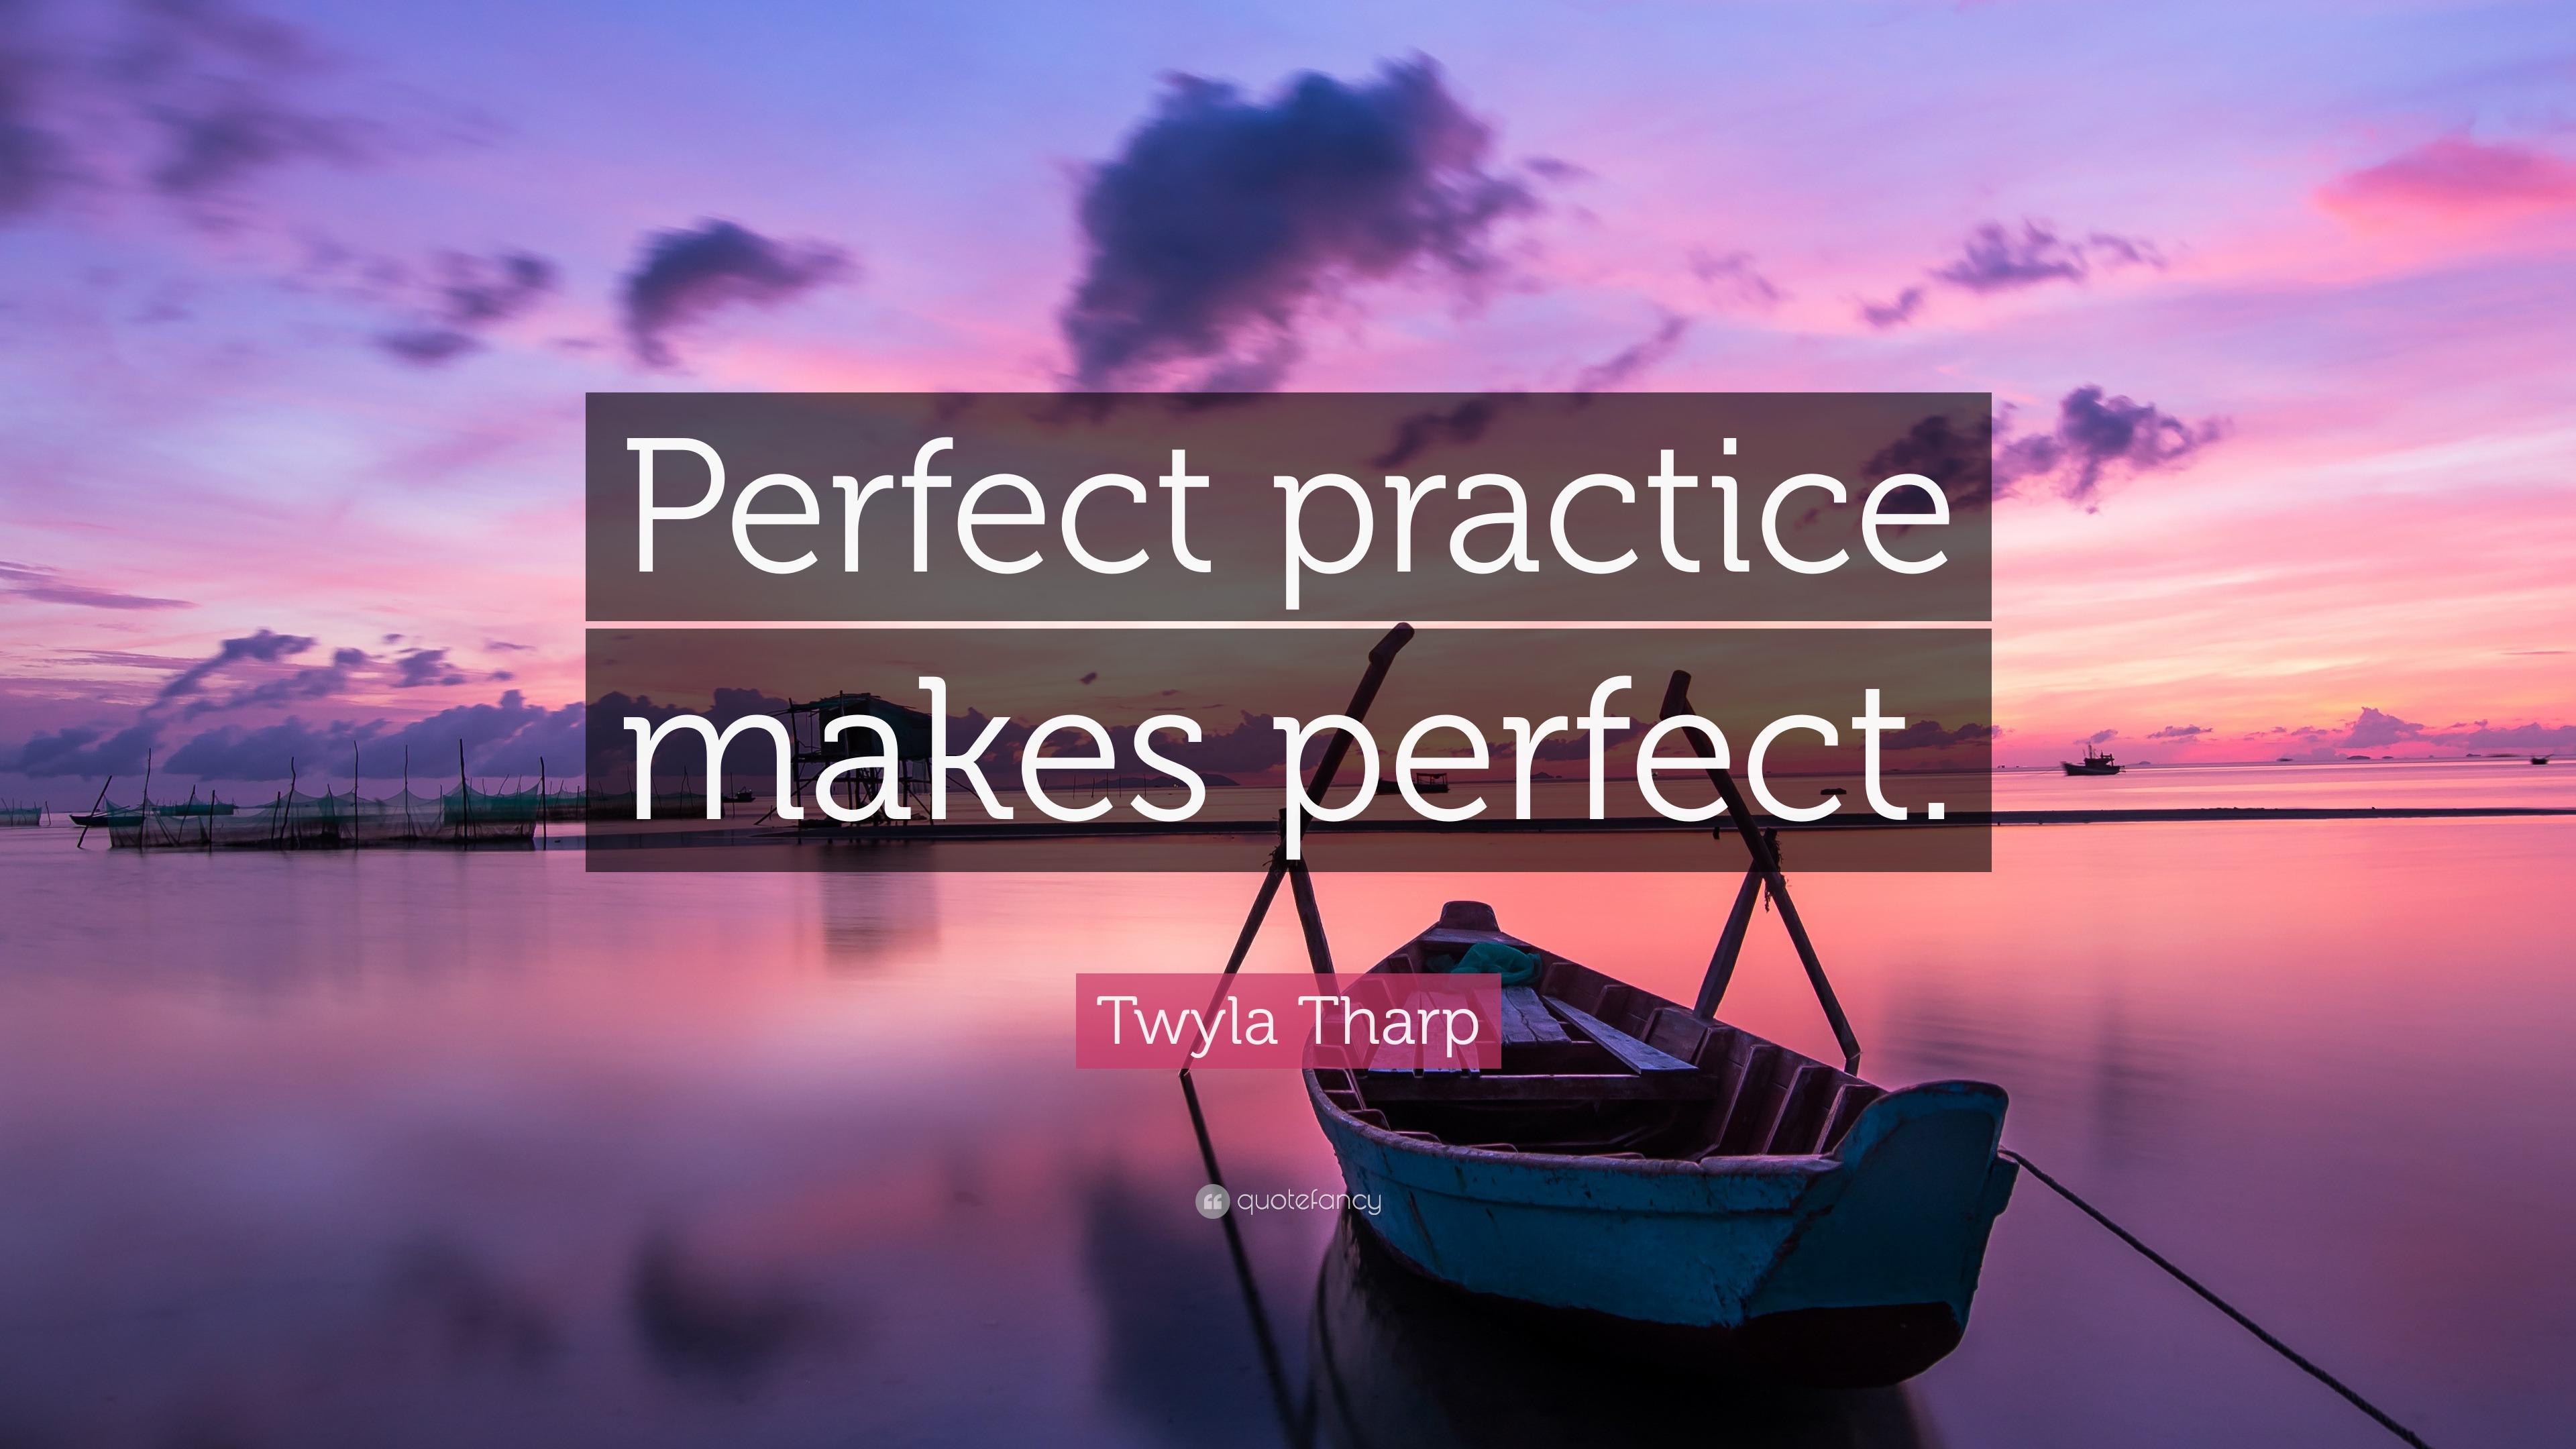 Twyla Tharp Quote “perfect Practice Makes Perfect”